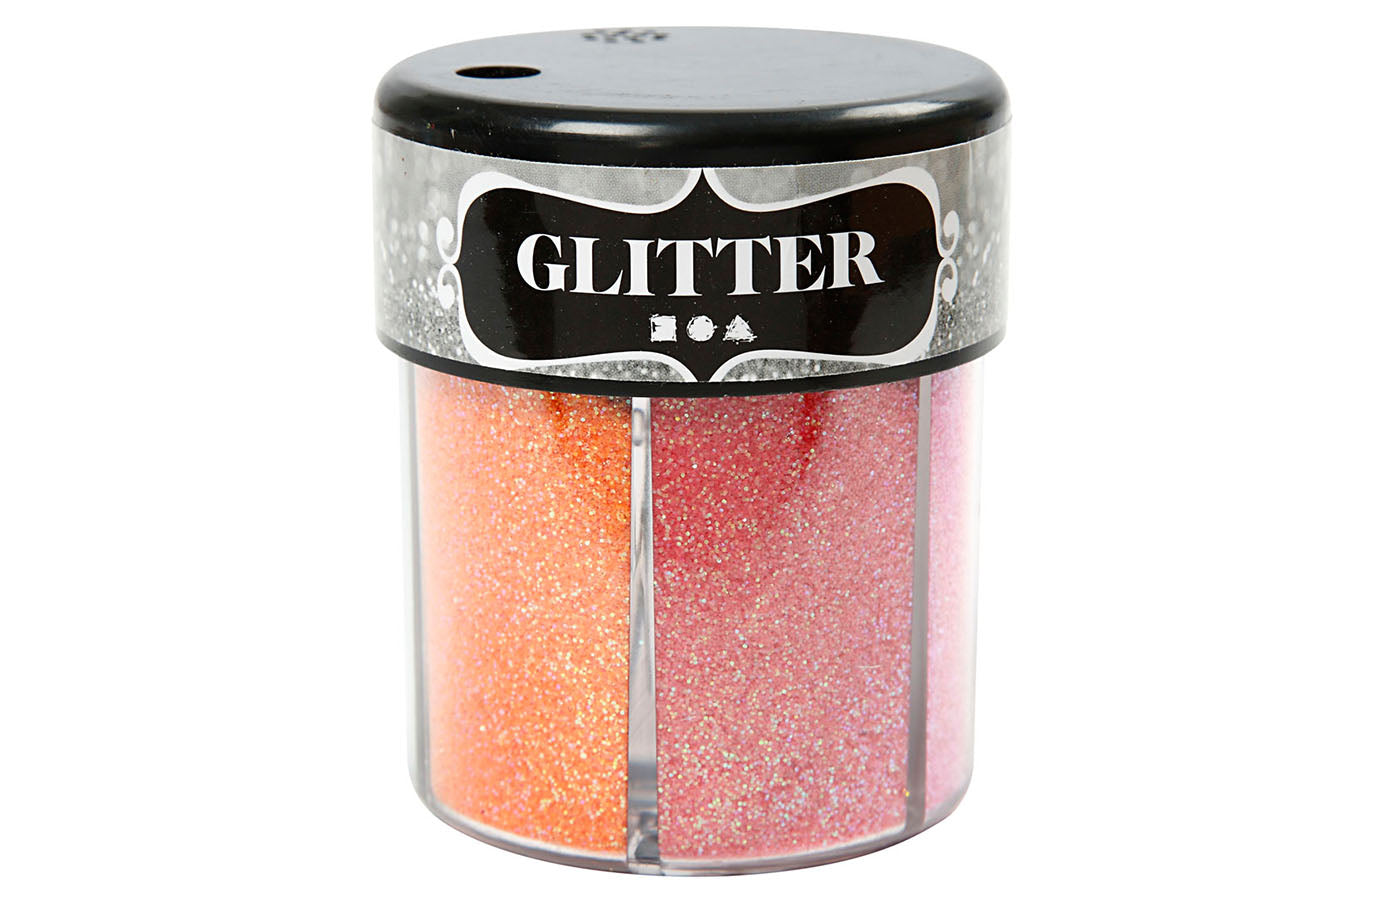 Glitters